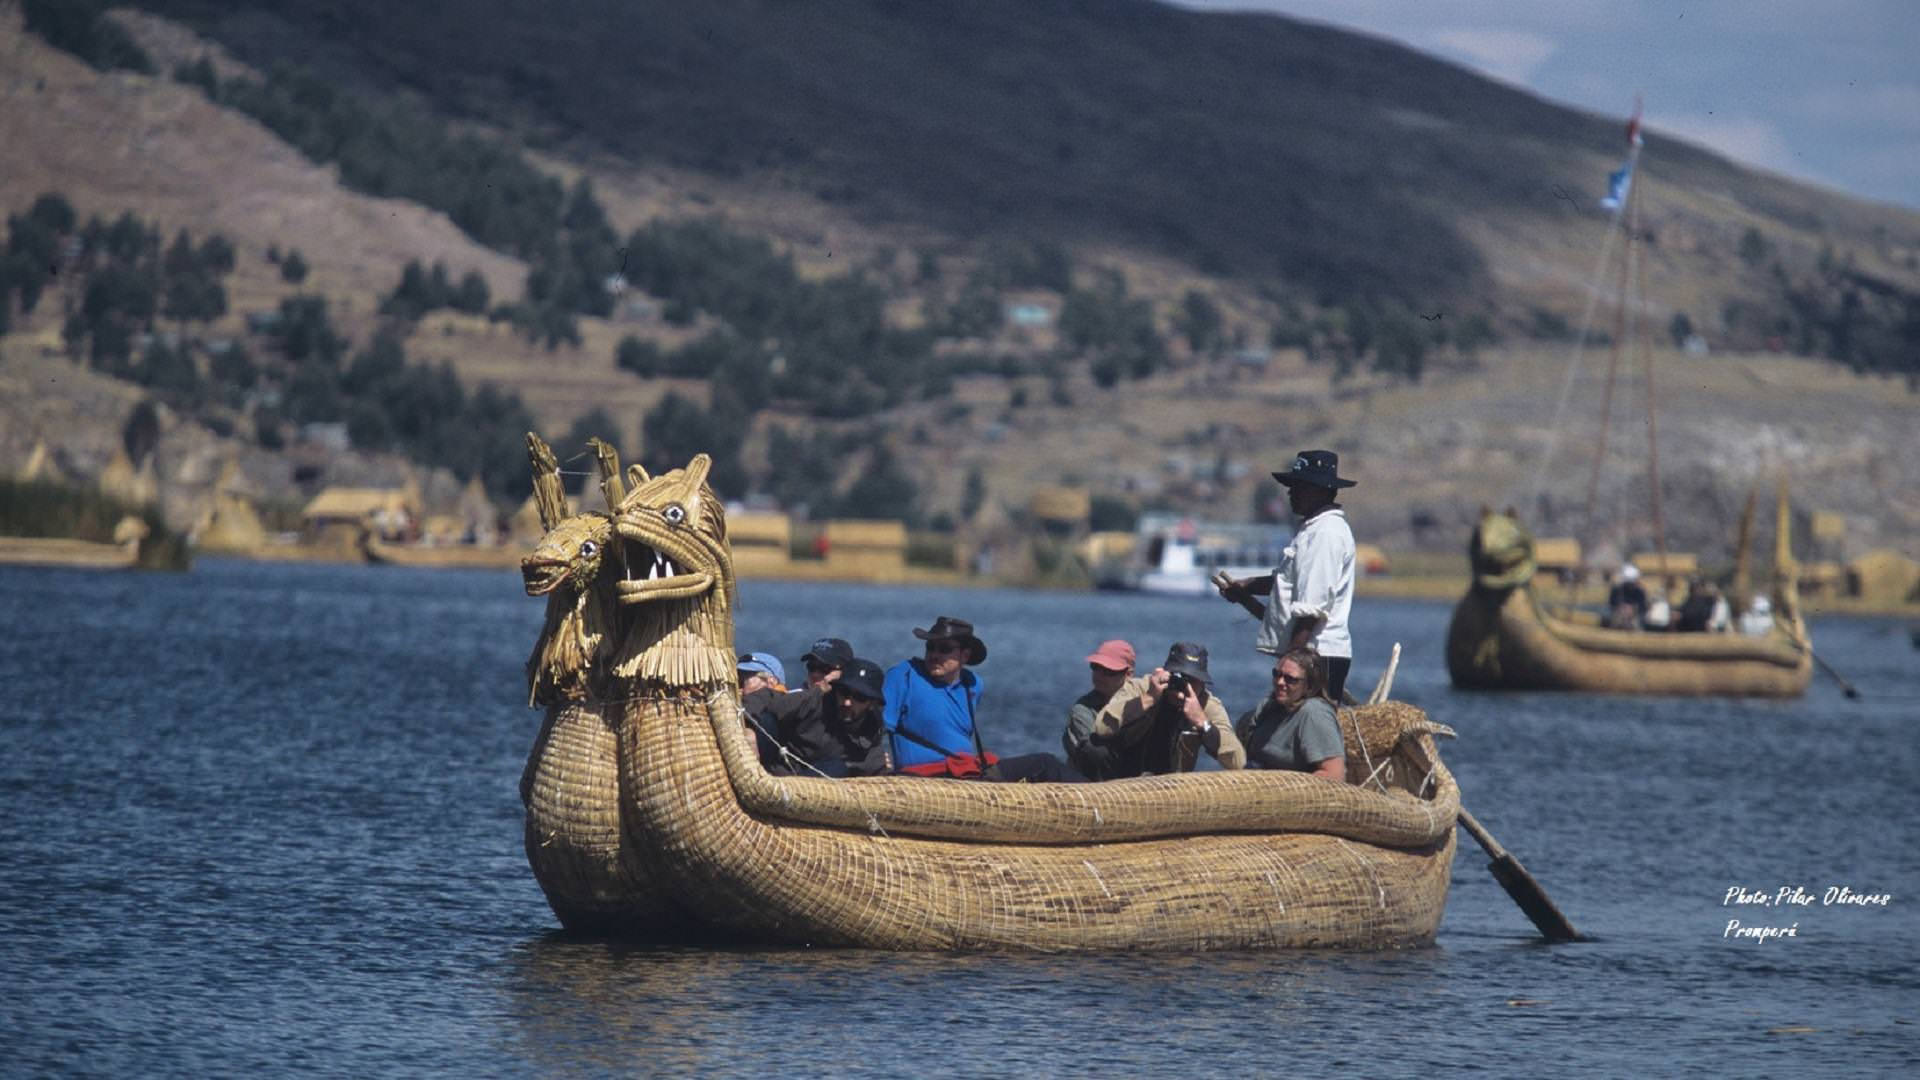 Lake Titicaca 1-Day Tours